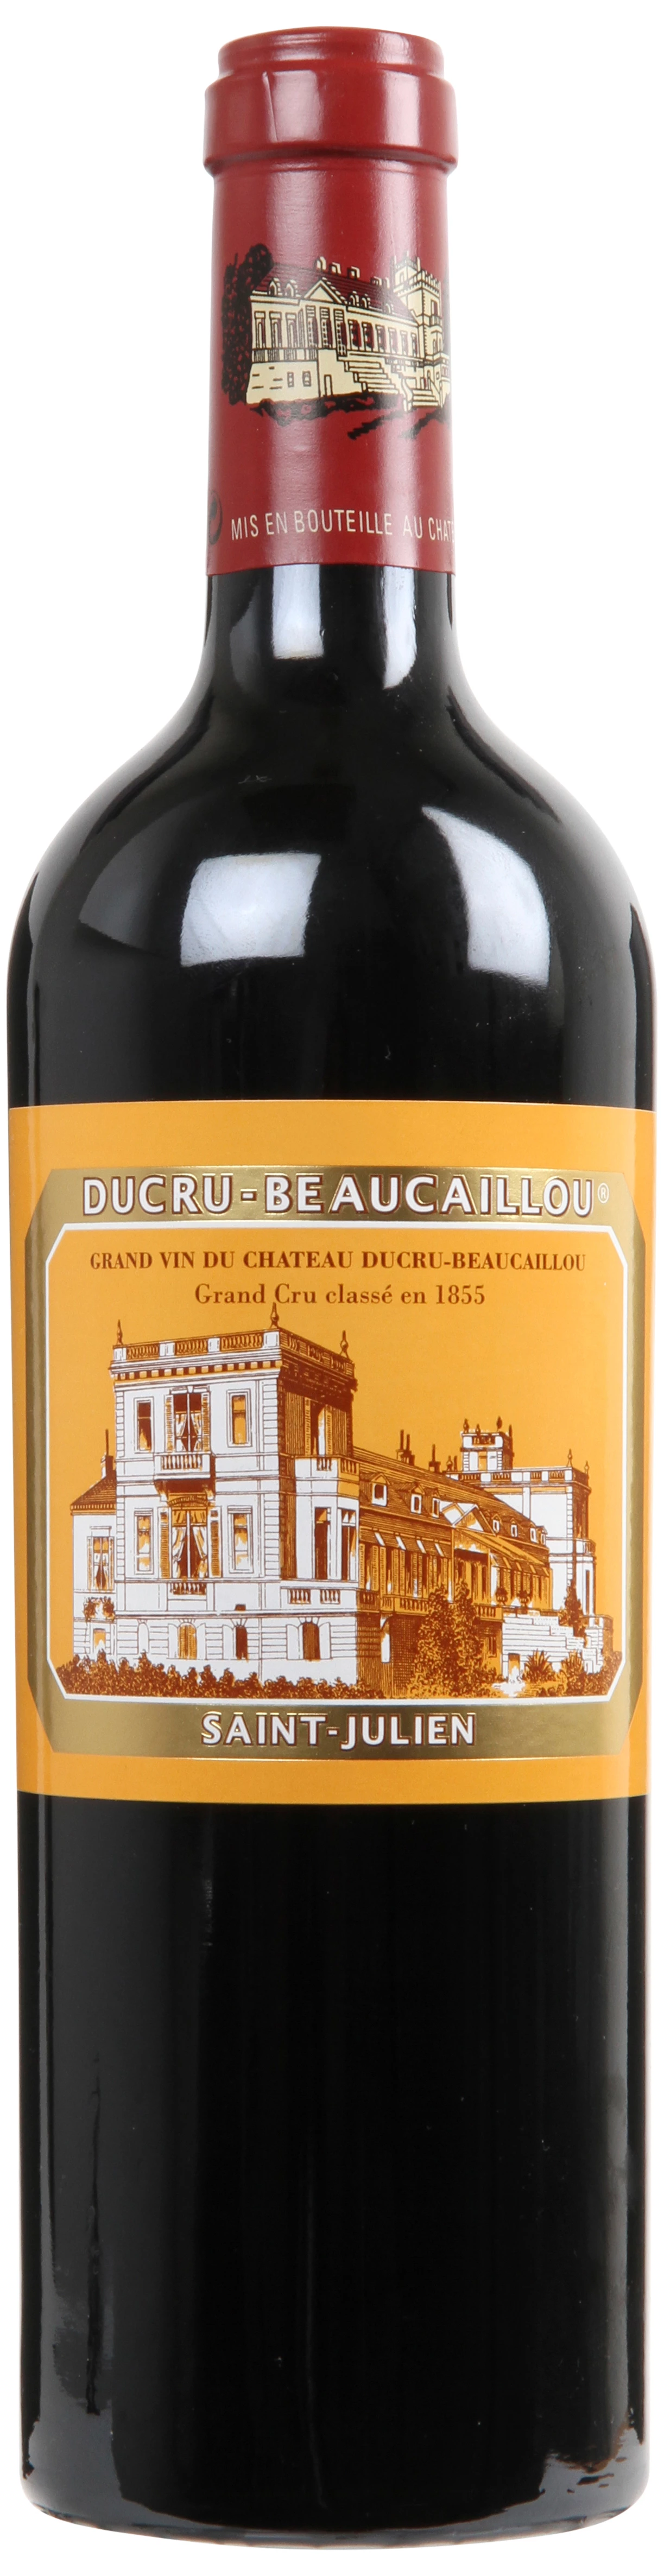 Løgismose Rødvin Chateau Ducru Beaucaillou 2 cru 1855 Saint Julien 2016 - 209410